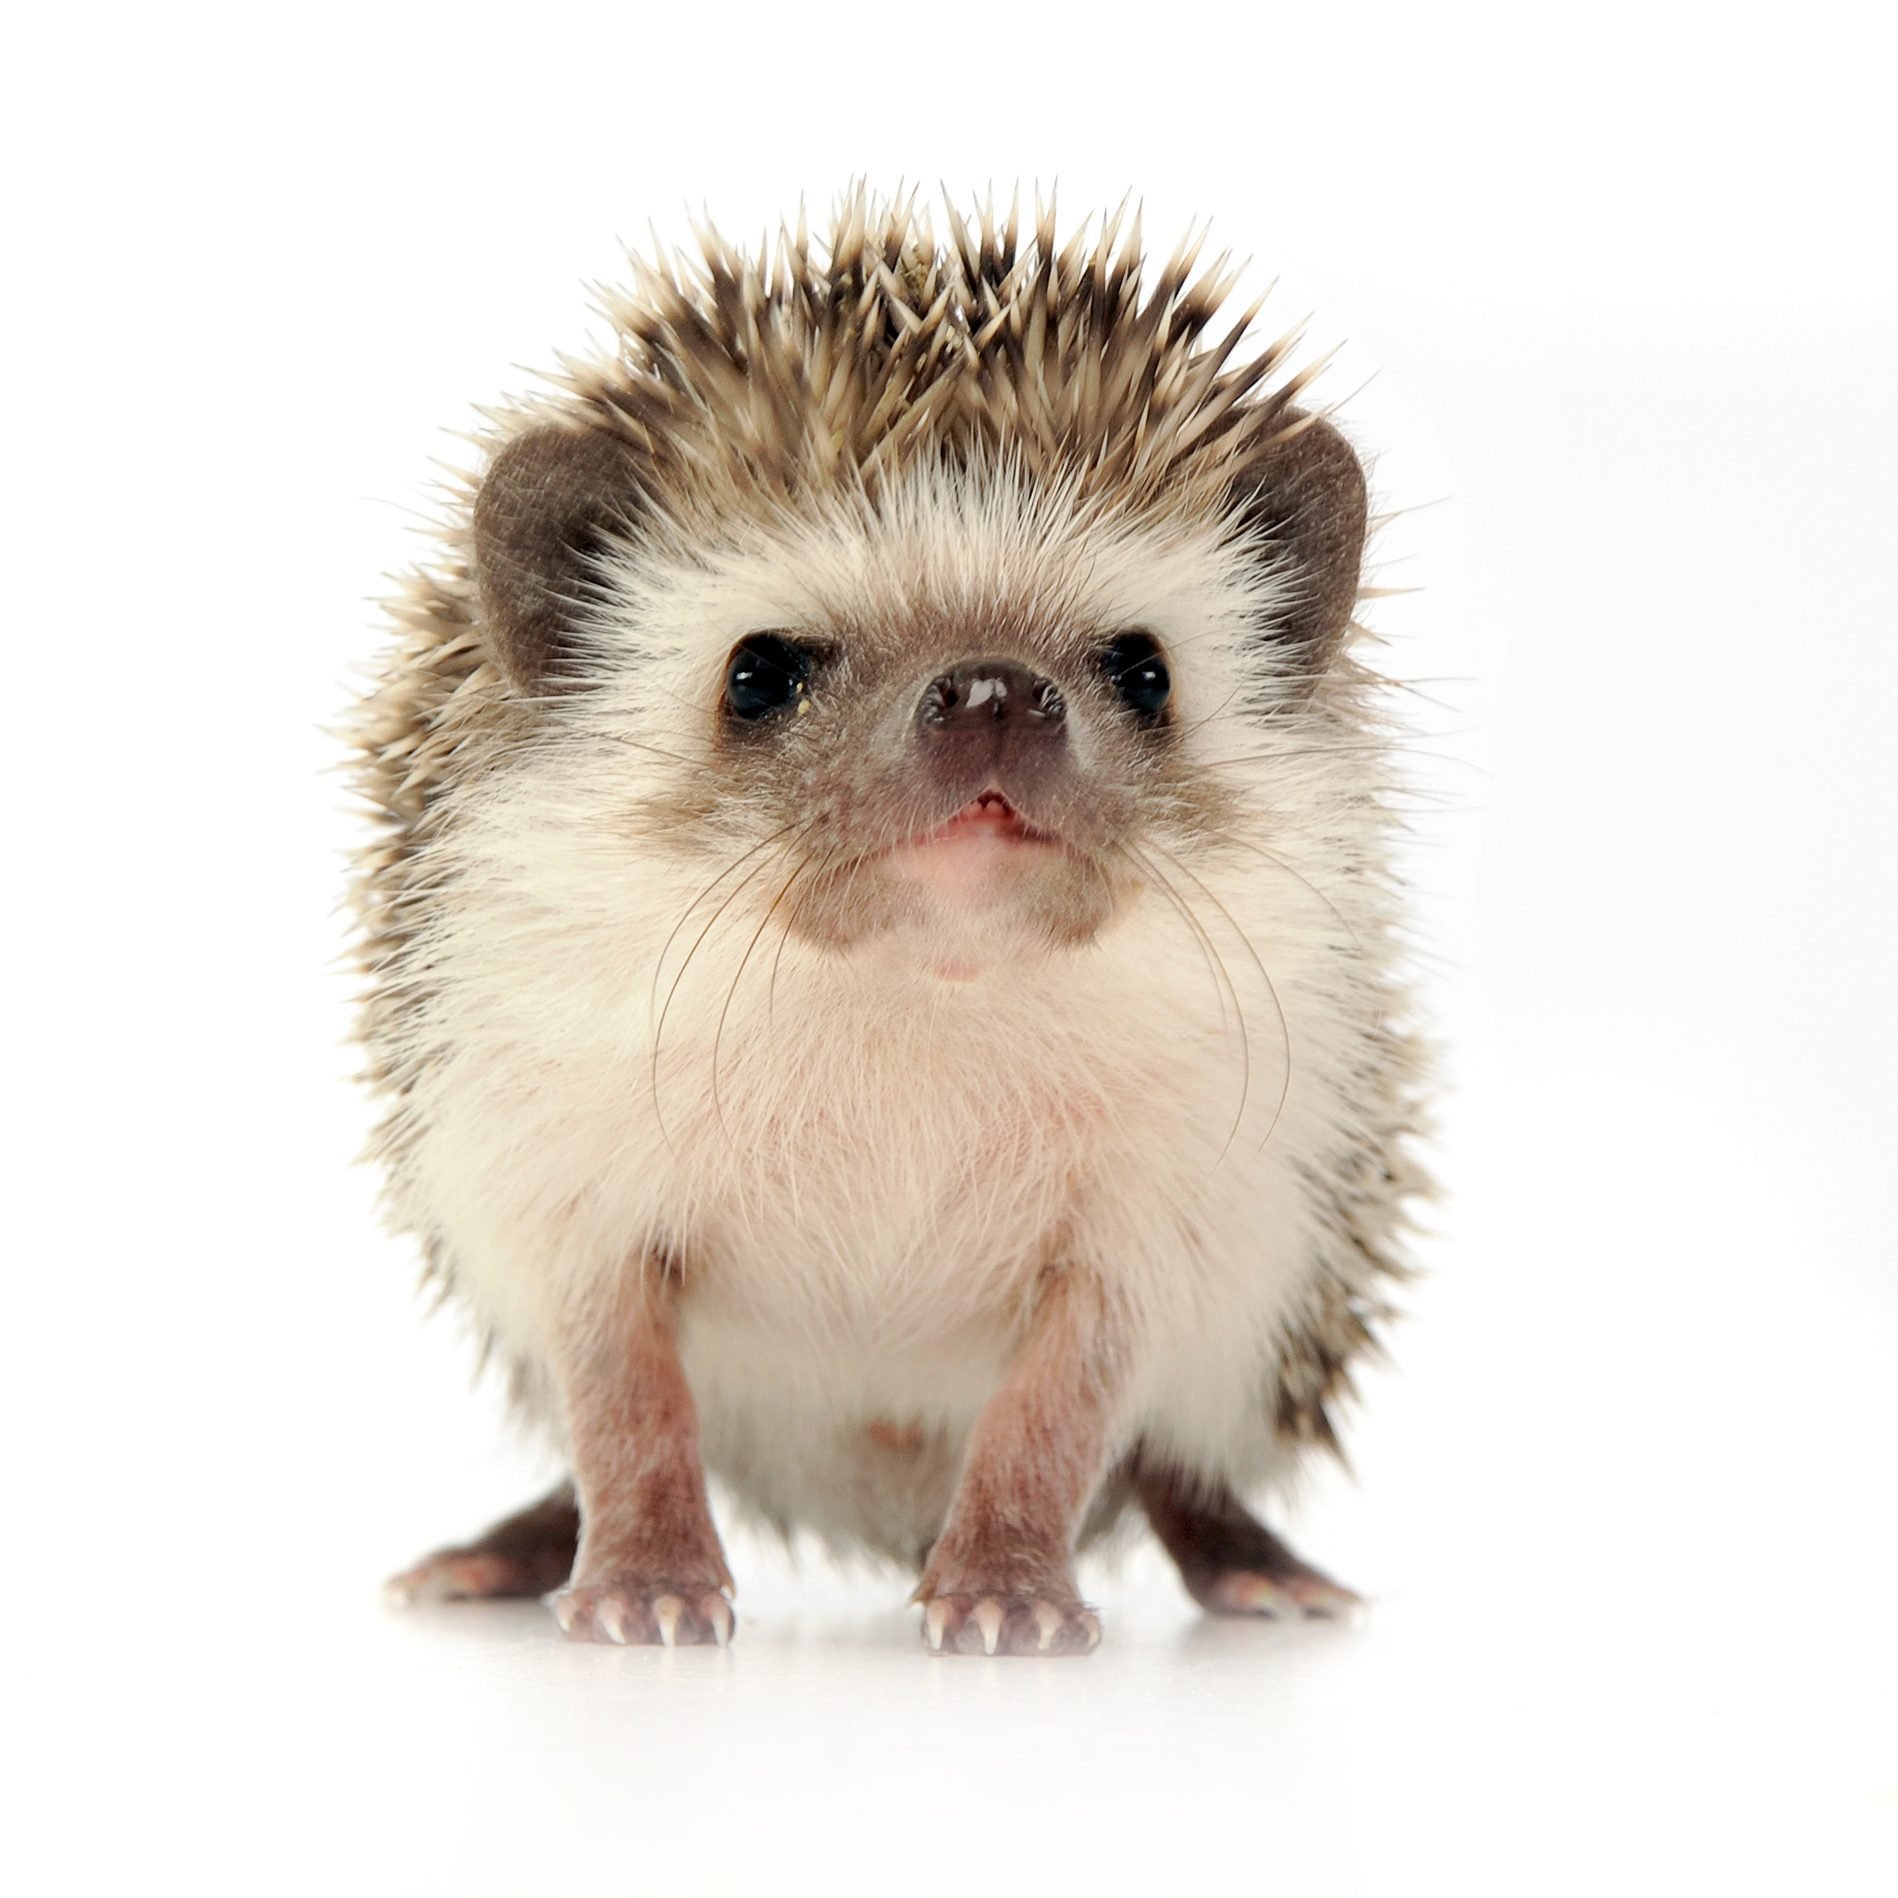 Close-Up Portrait Of Hedgehog Over White Background